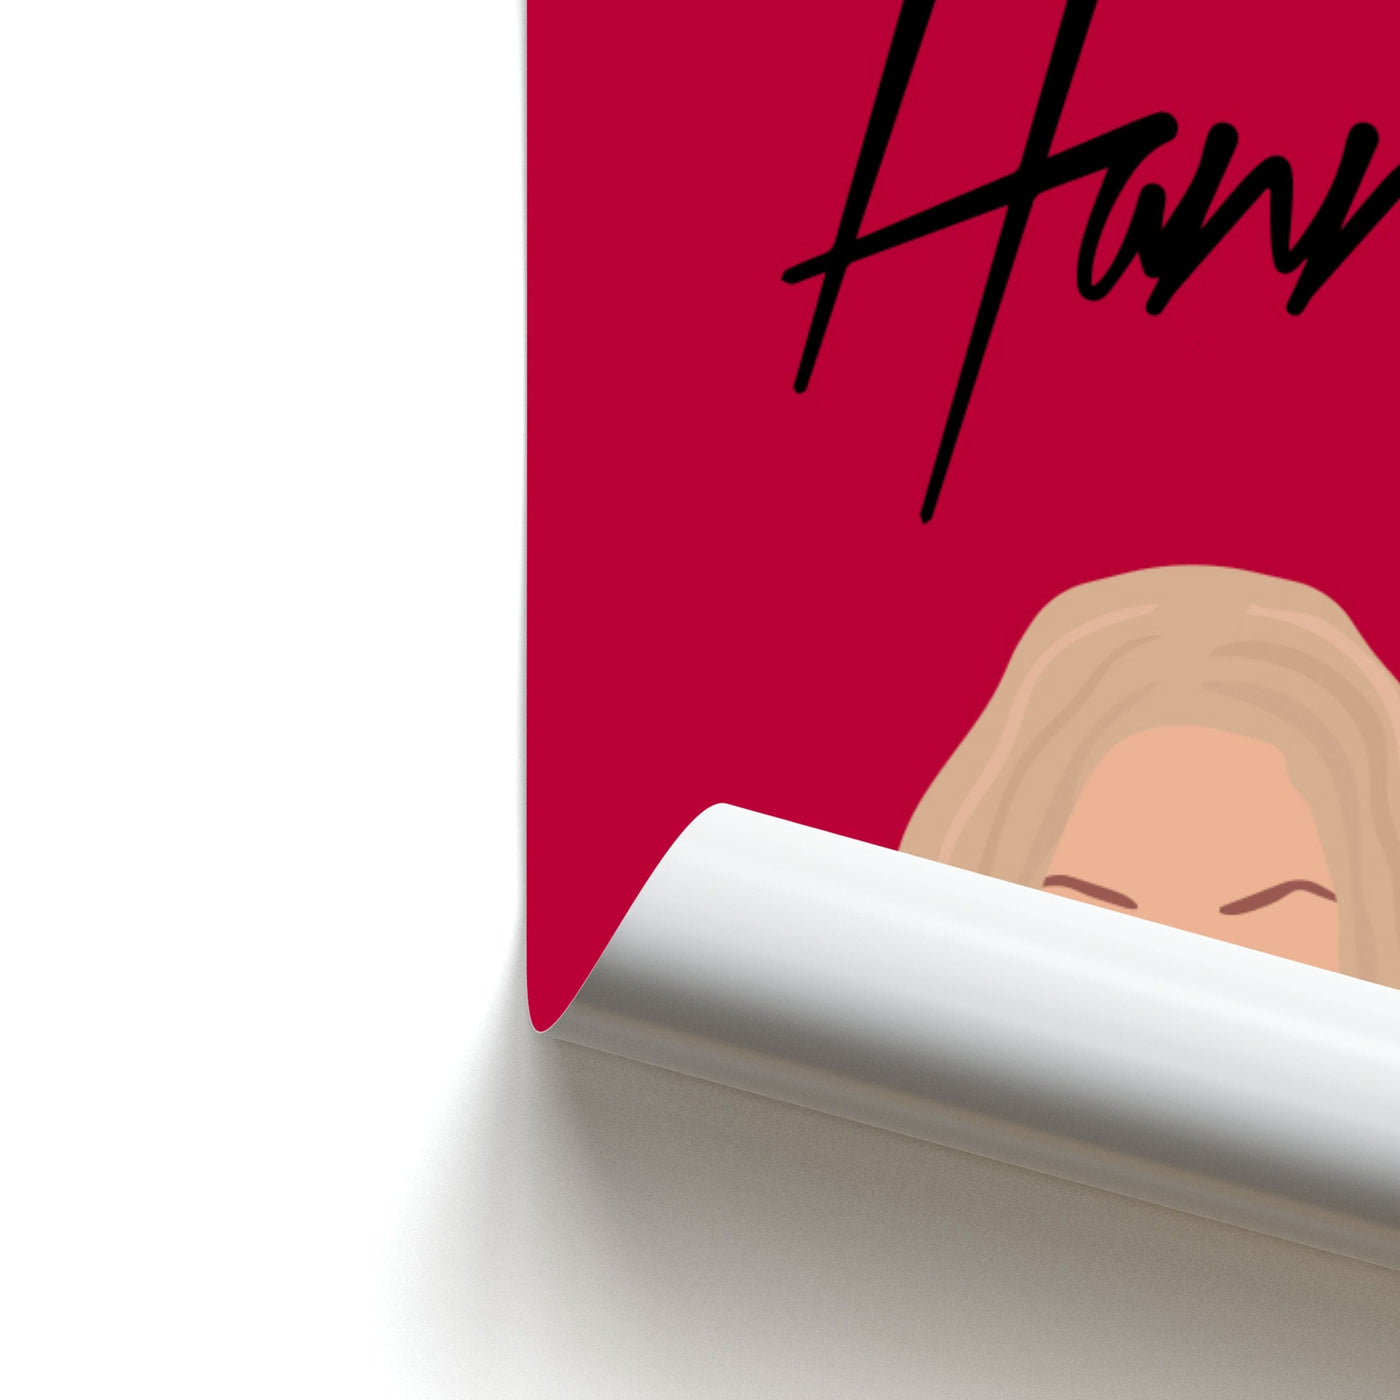 Hanna - Pretty Little Liars Poster